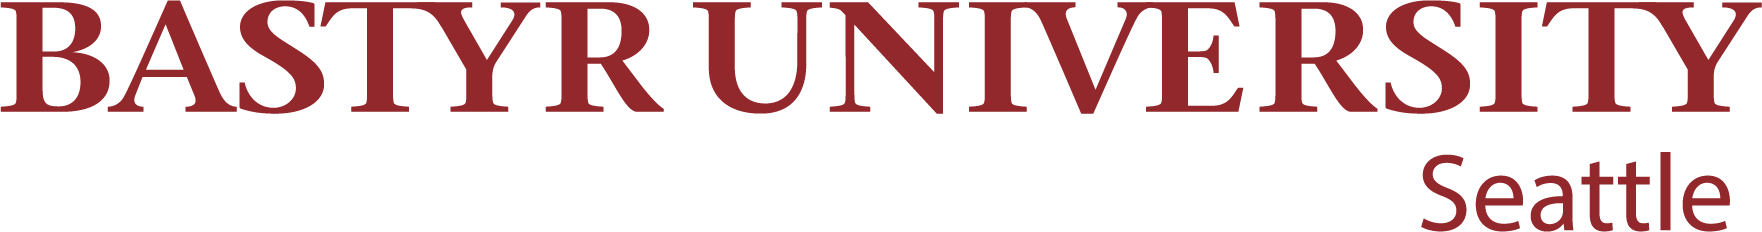 Bastyr University Seattle location logo